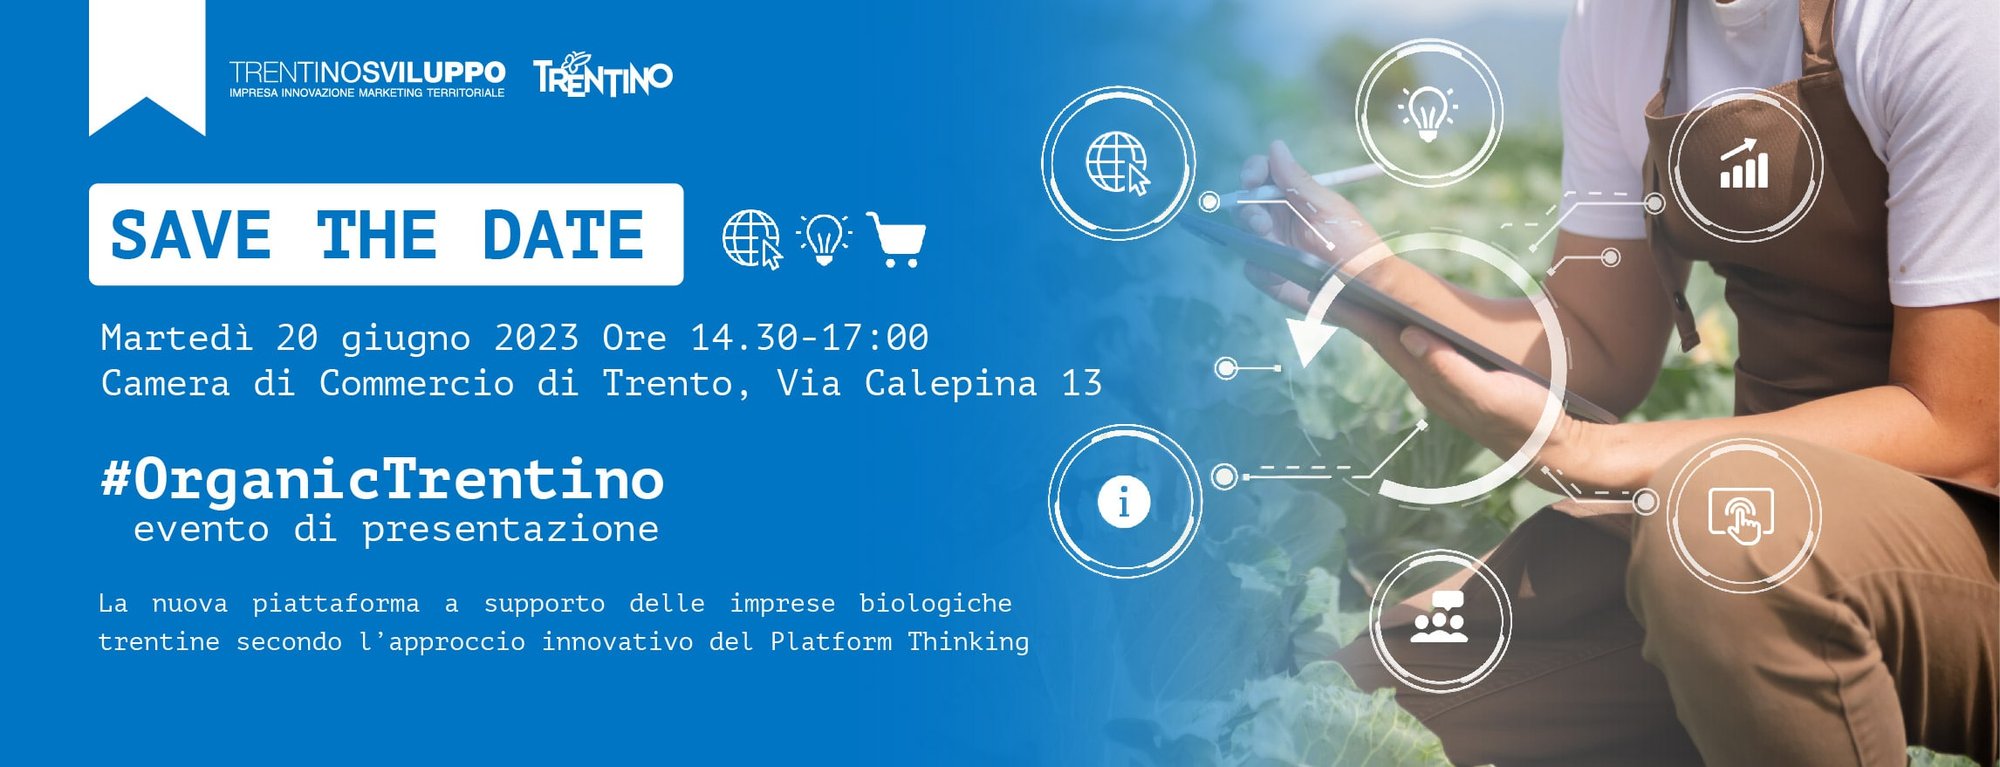 OrganicTrentino - Save The Date